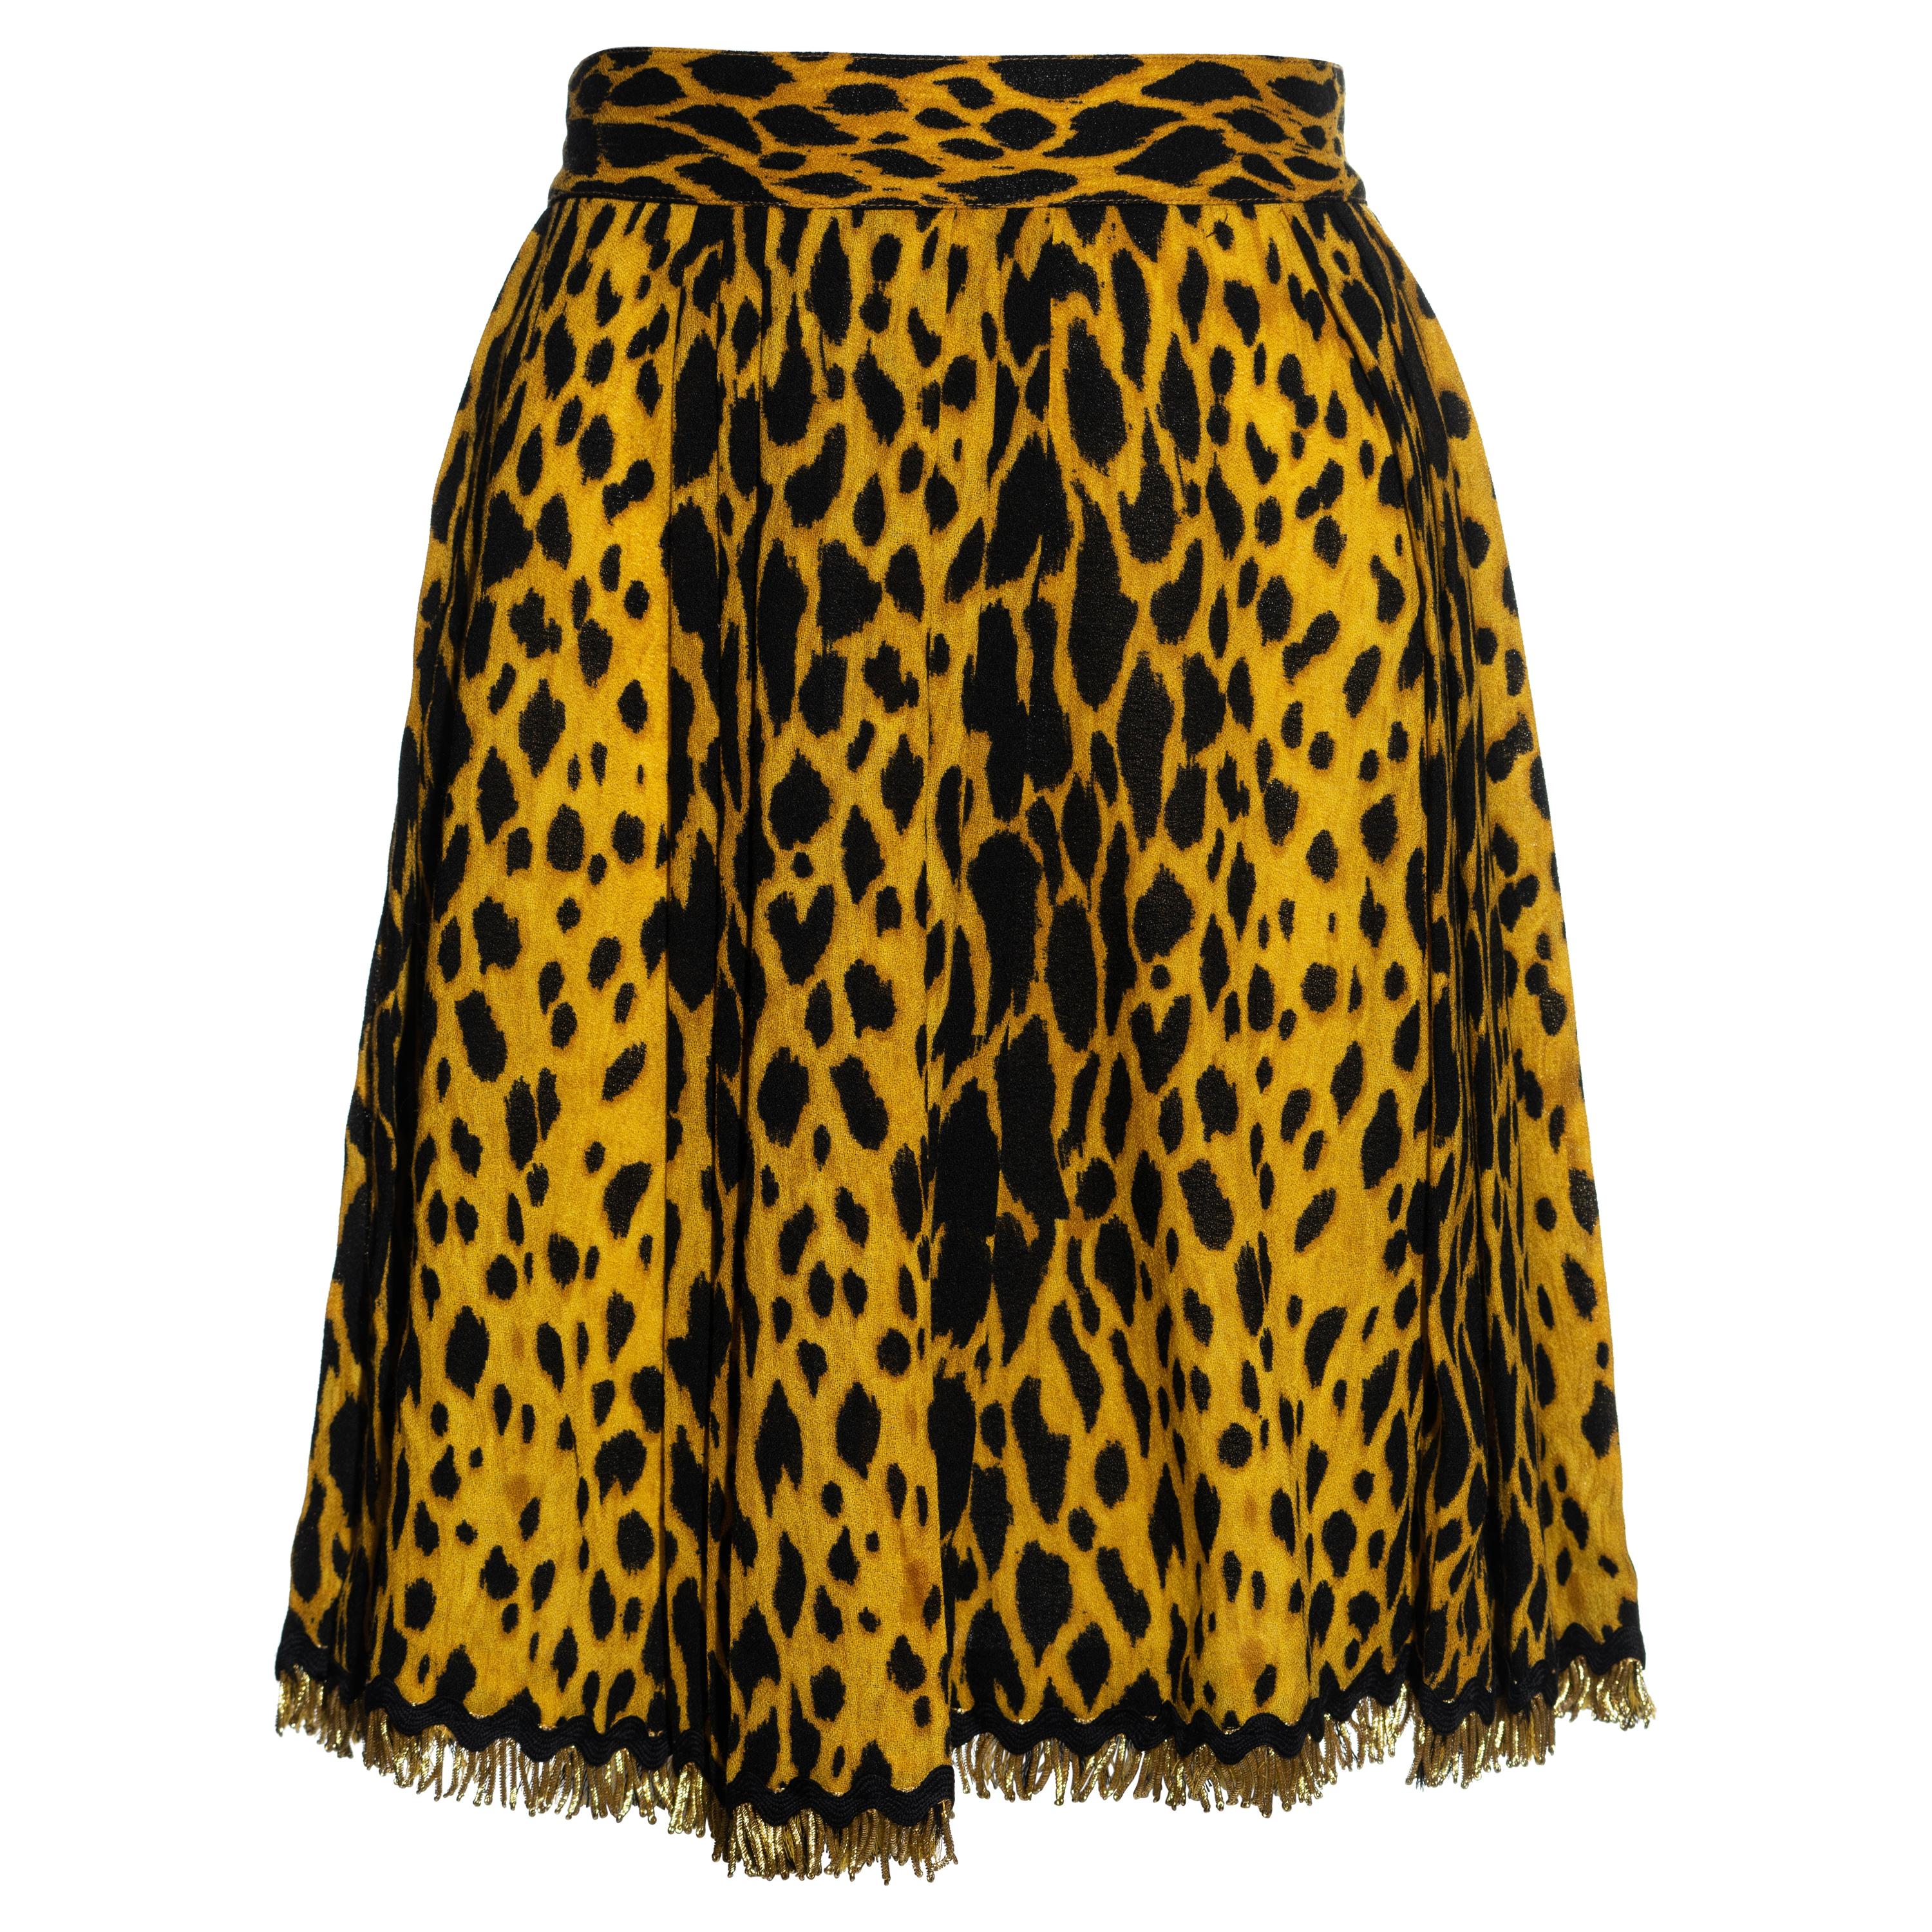 Gianni Versace yellow cheetah print wool crepe pleated wrap skirt, ss 1992